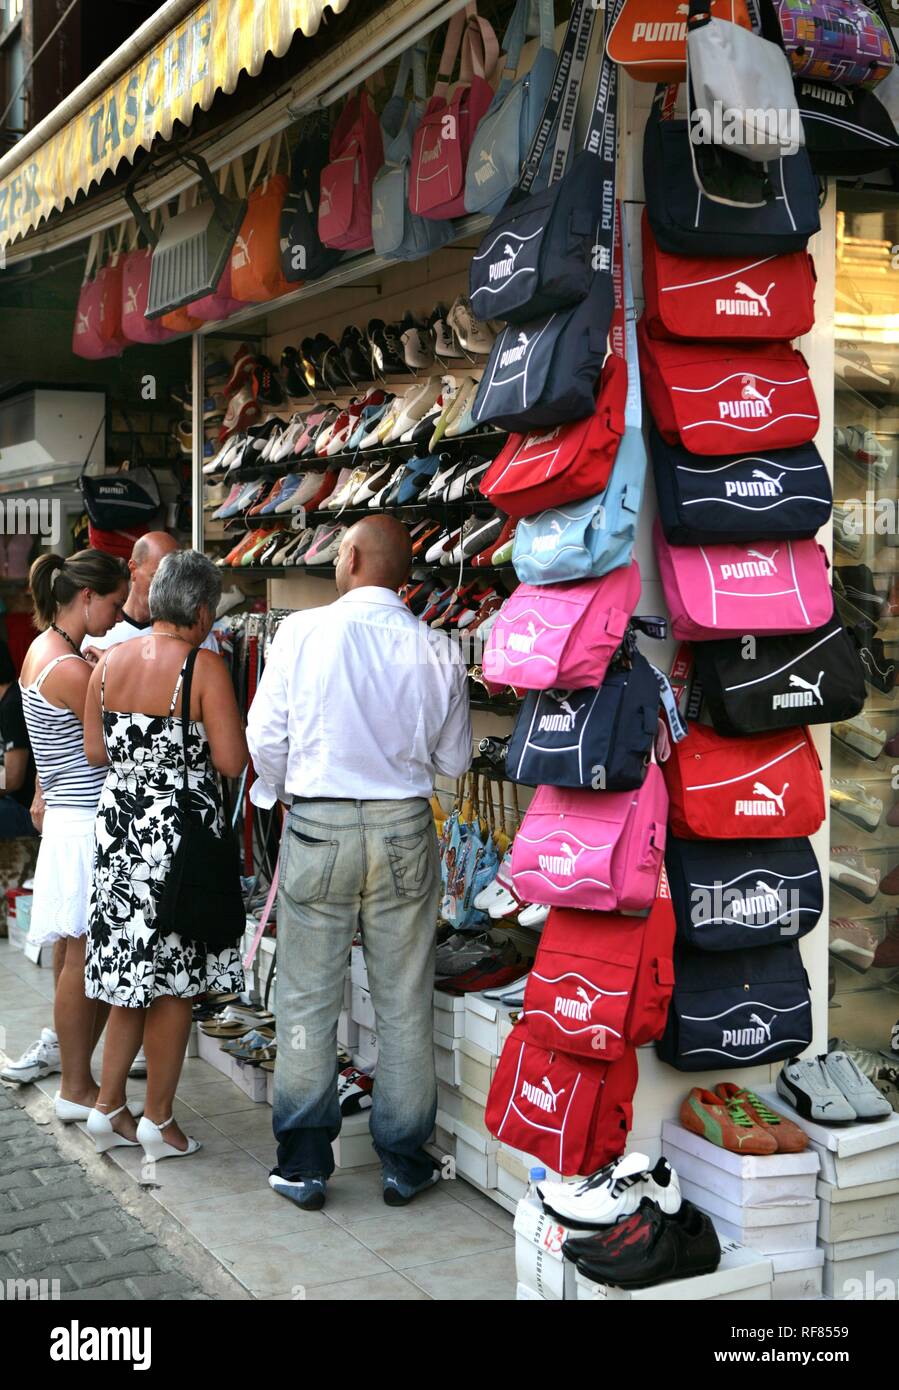 Fake sneaker shopping in Turkey 